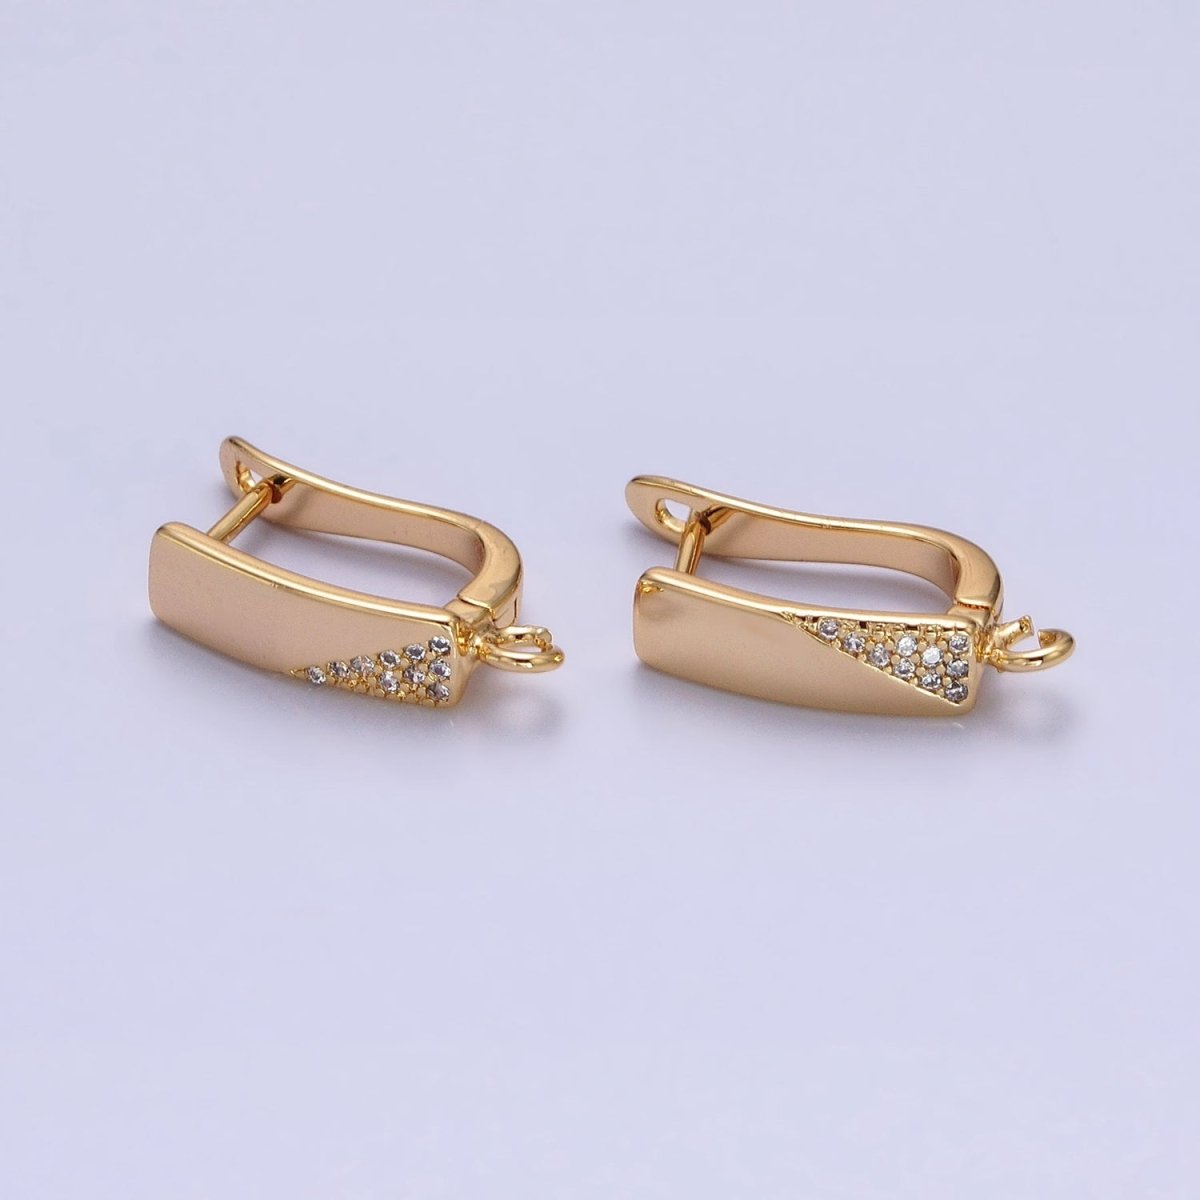 Dainty Gold Huggie Earring Lever Back Earring with Open Link for Earring Supply Z-188 - DLUXCA